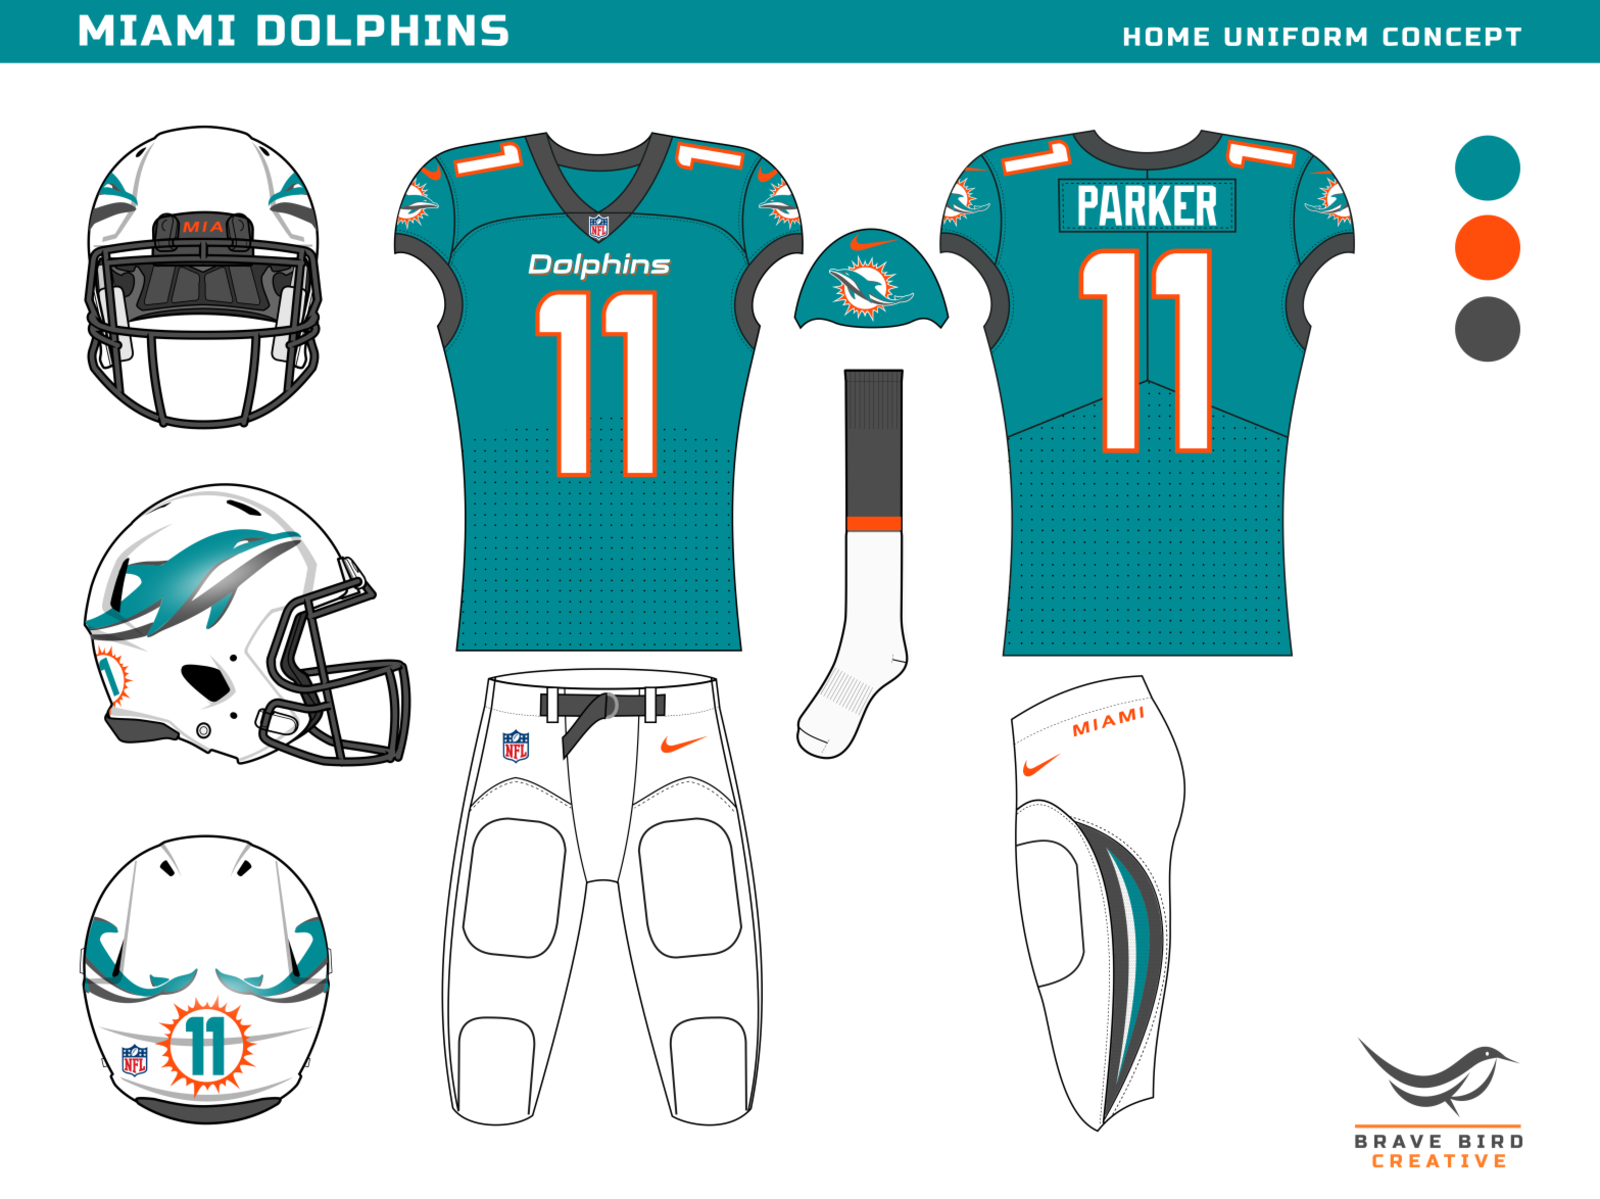 NFL Uniform Concepts  Texans added (2/2) - Page 3 - Concepts